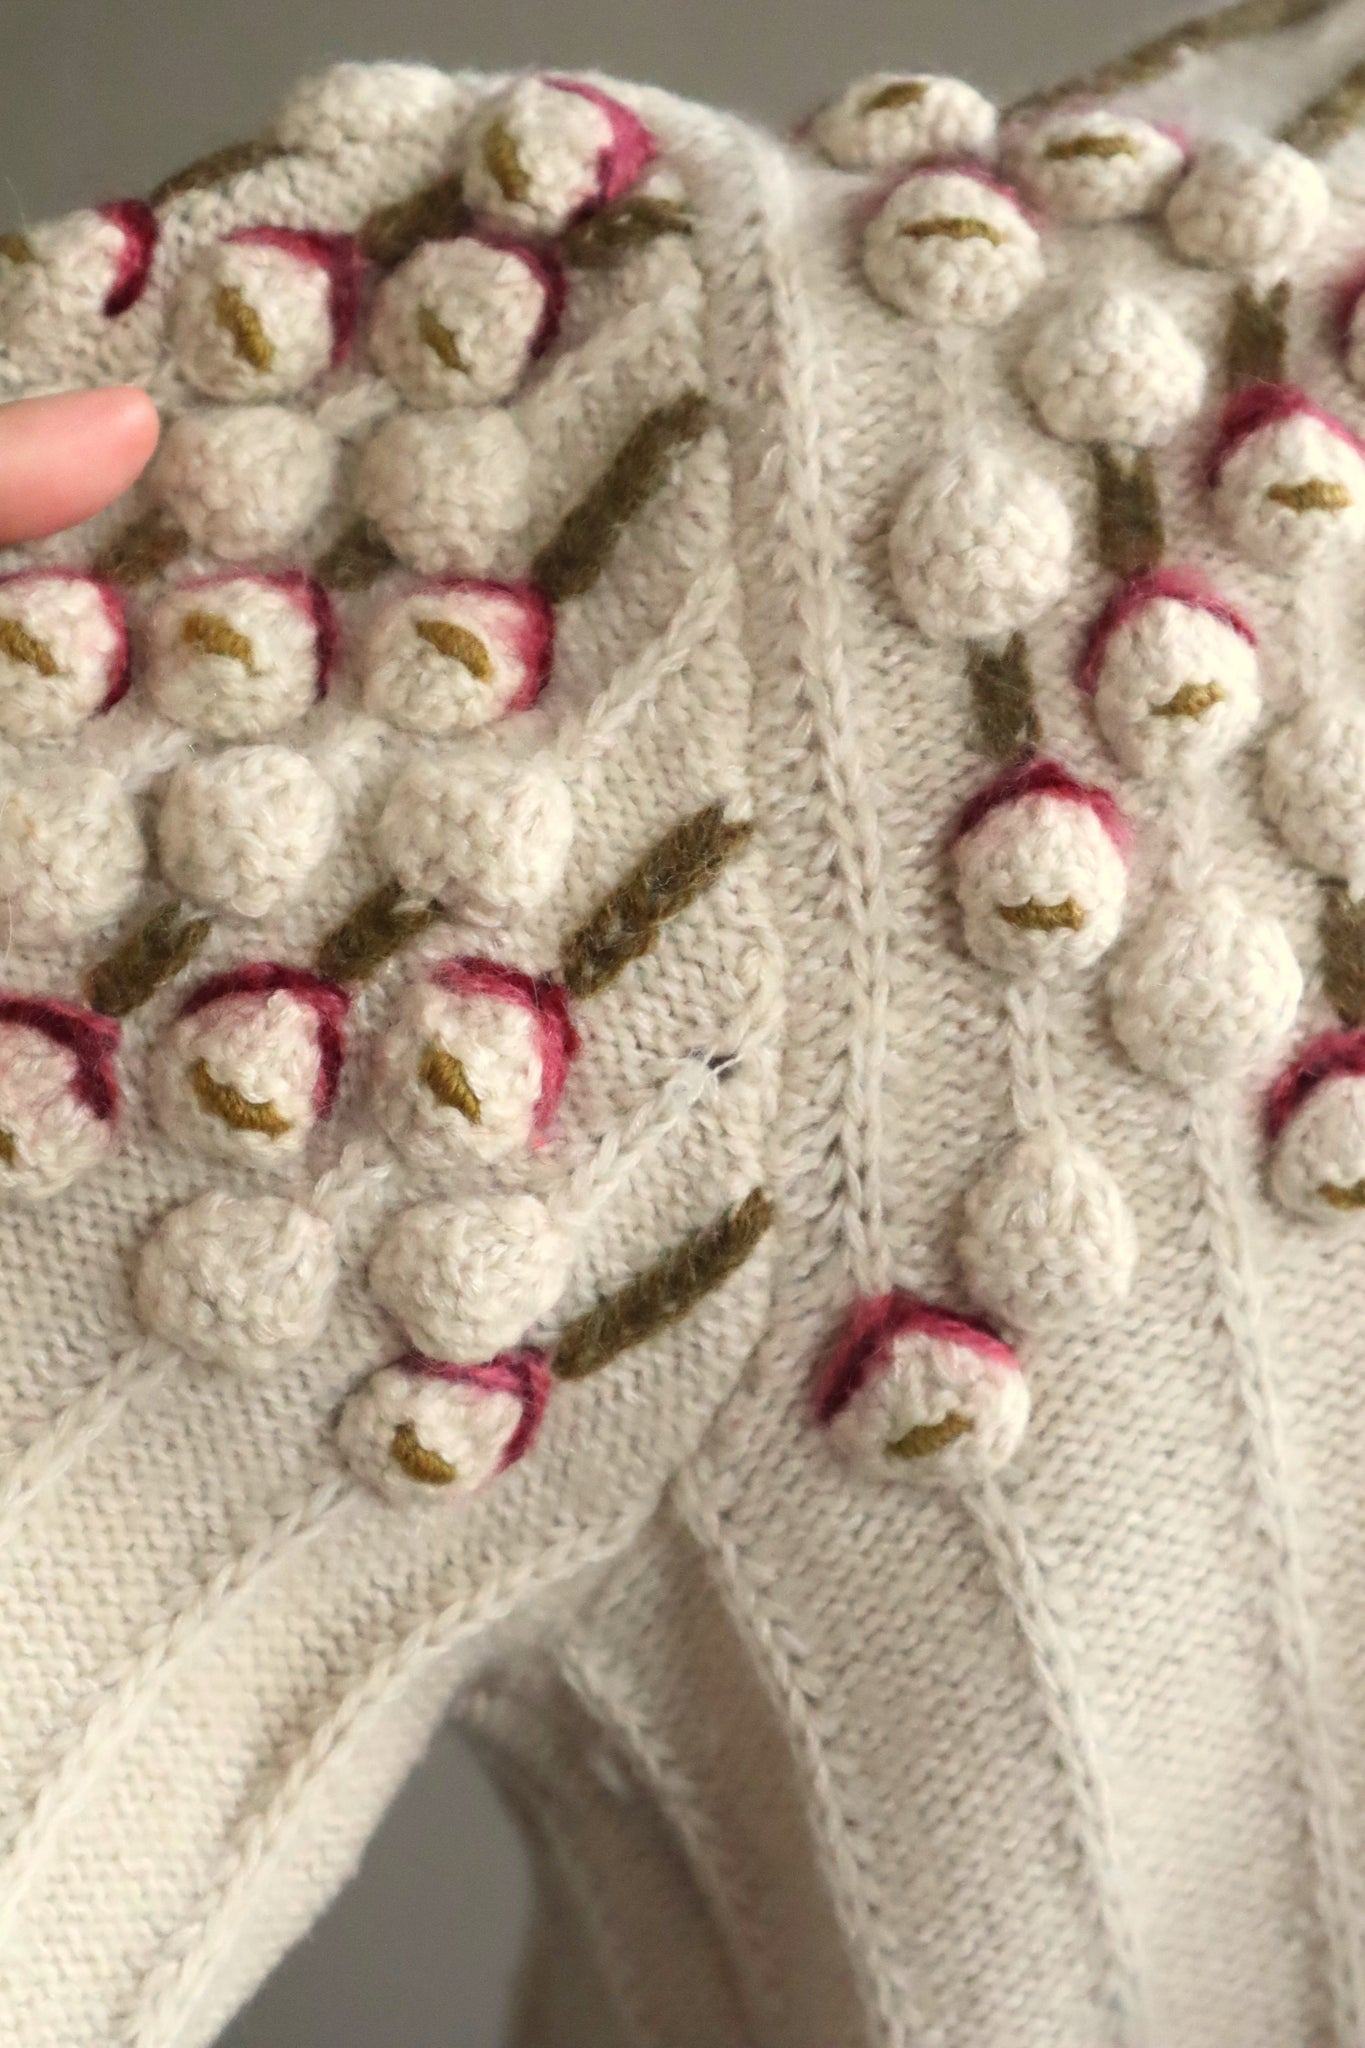 40s~50s Hand Knit Austrian Cardigan